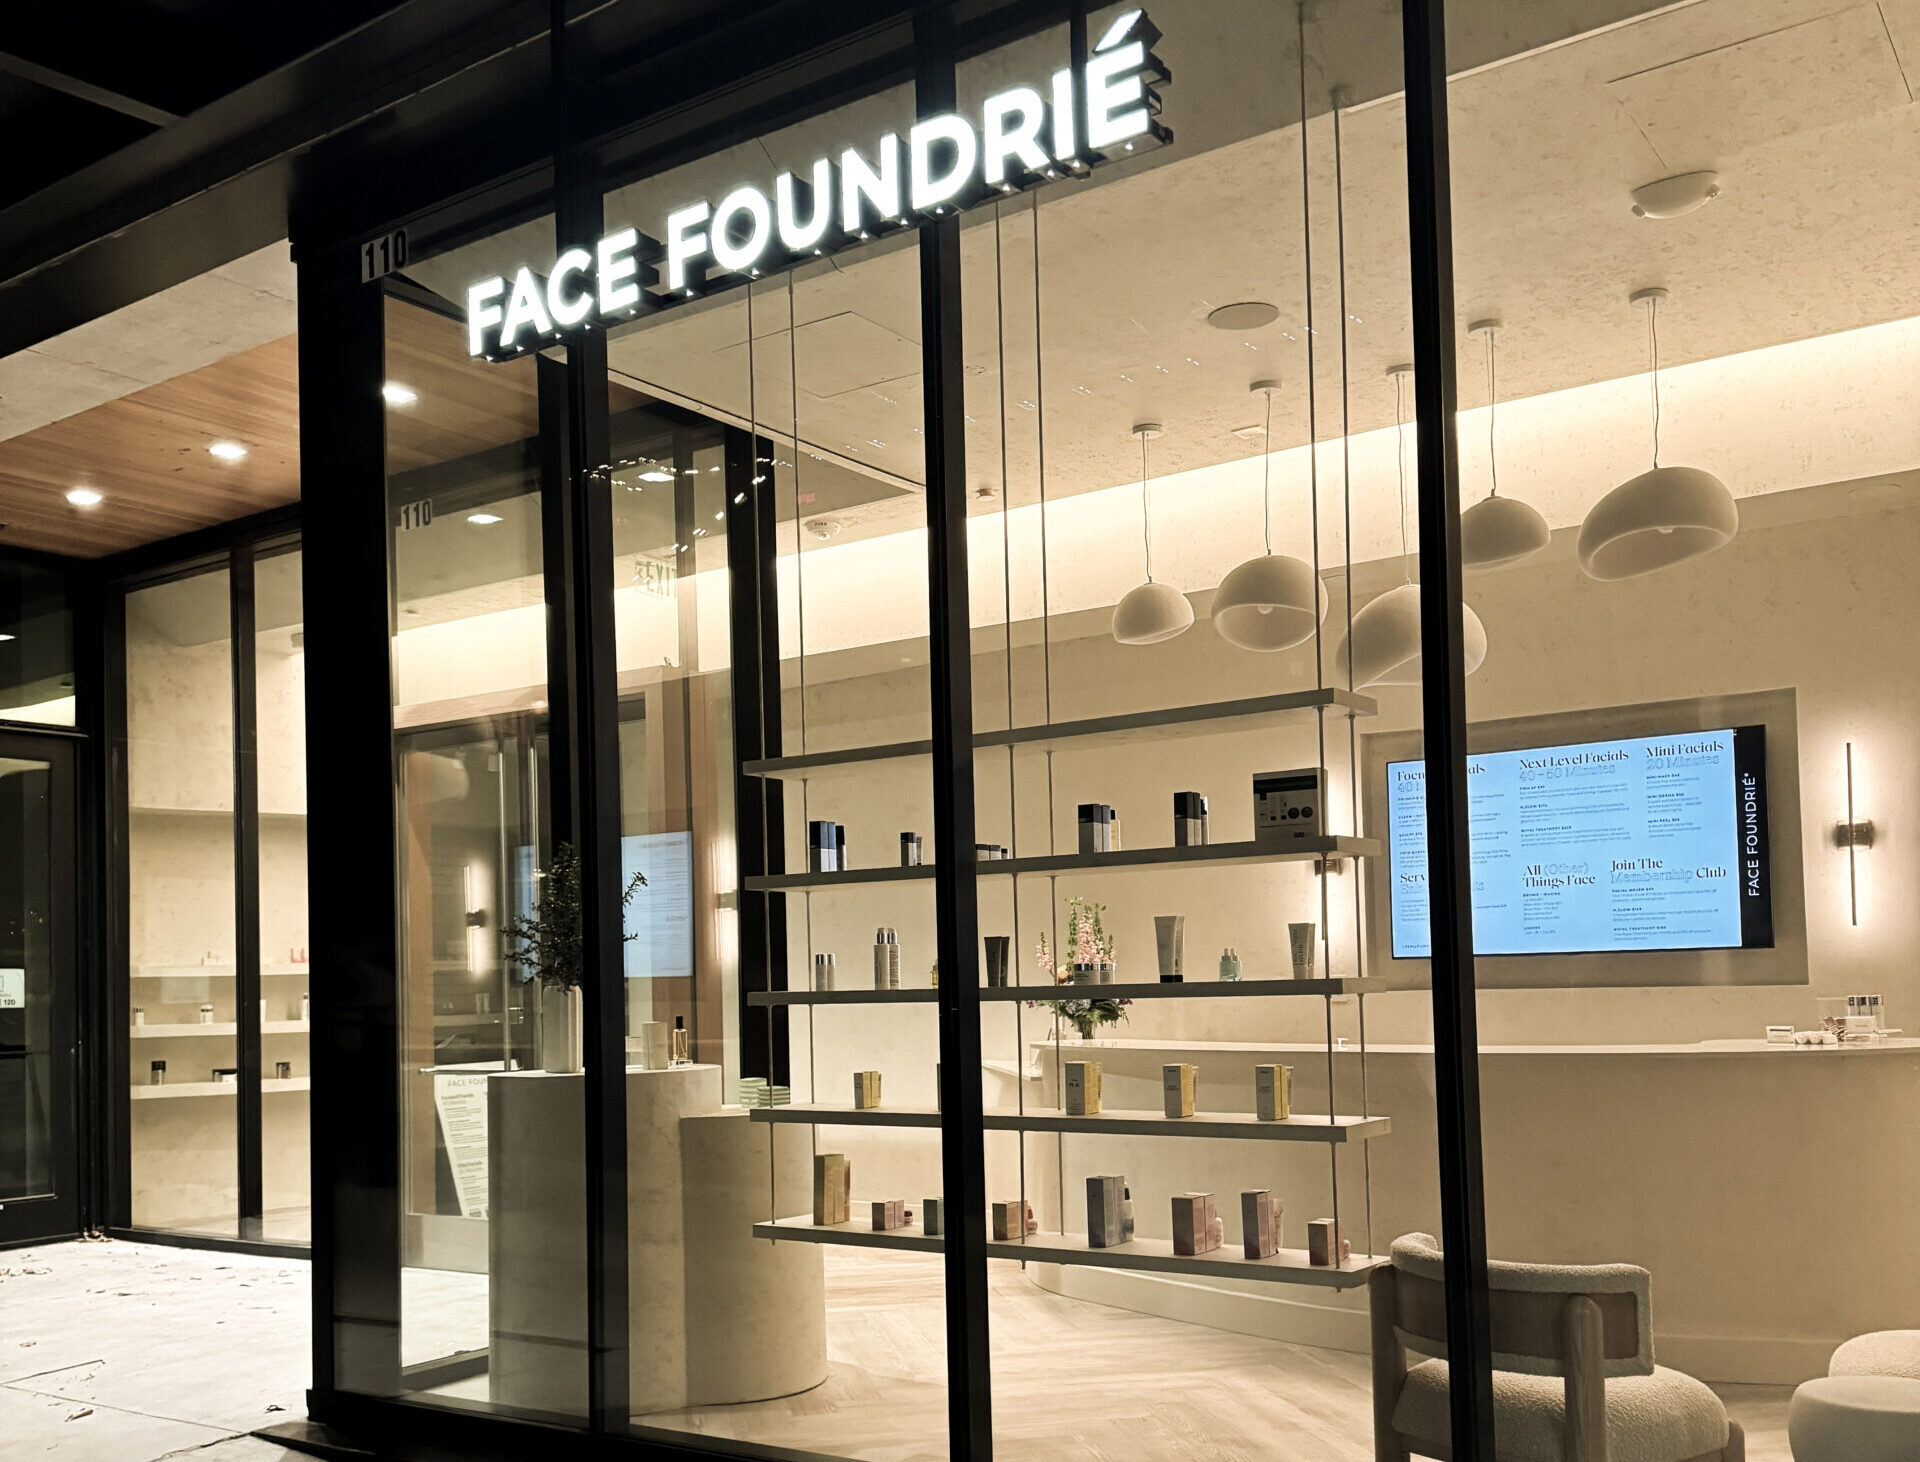 Image: Exterior of FACE FOUNDRIÉ Austin Facial Bar